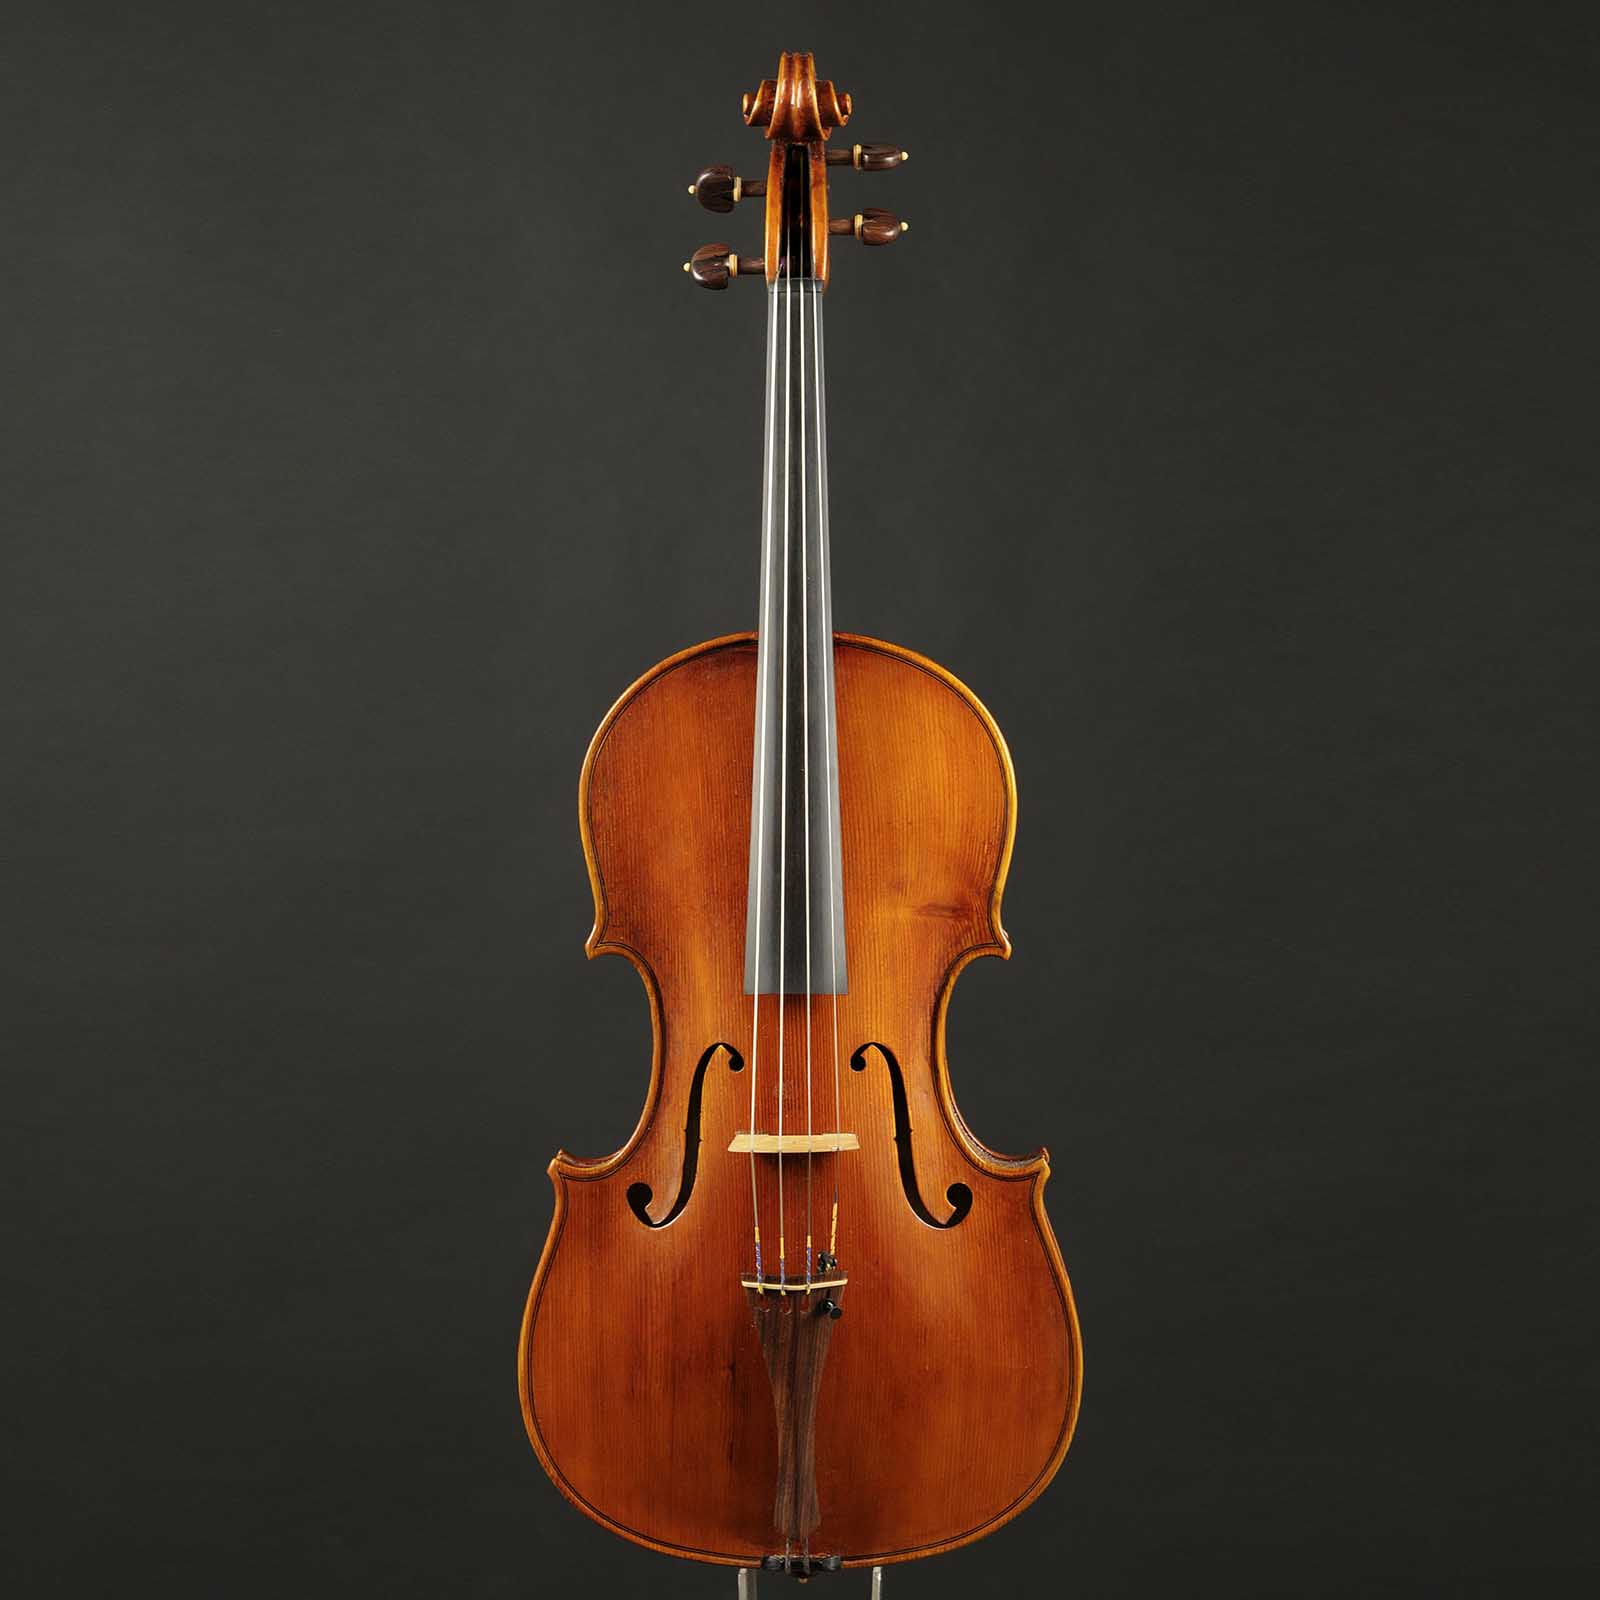 Antonio Stradivari Cremona 1672 “Salice Gattone“ cm 42 - Image 1